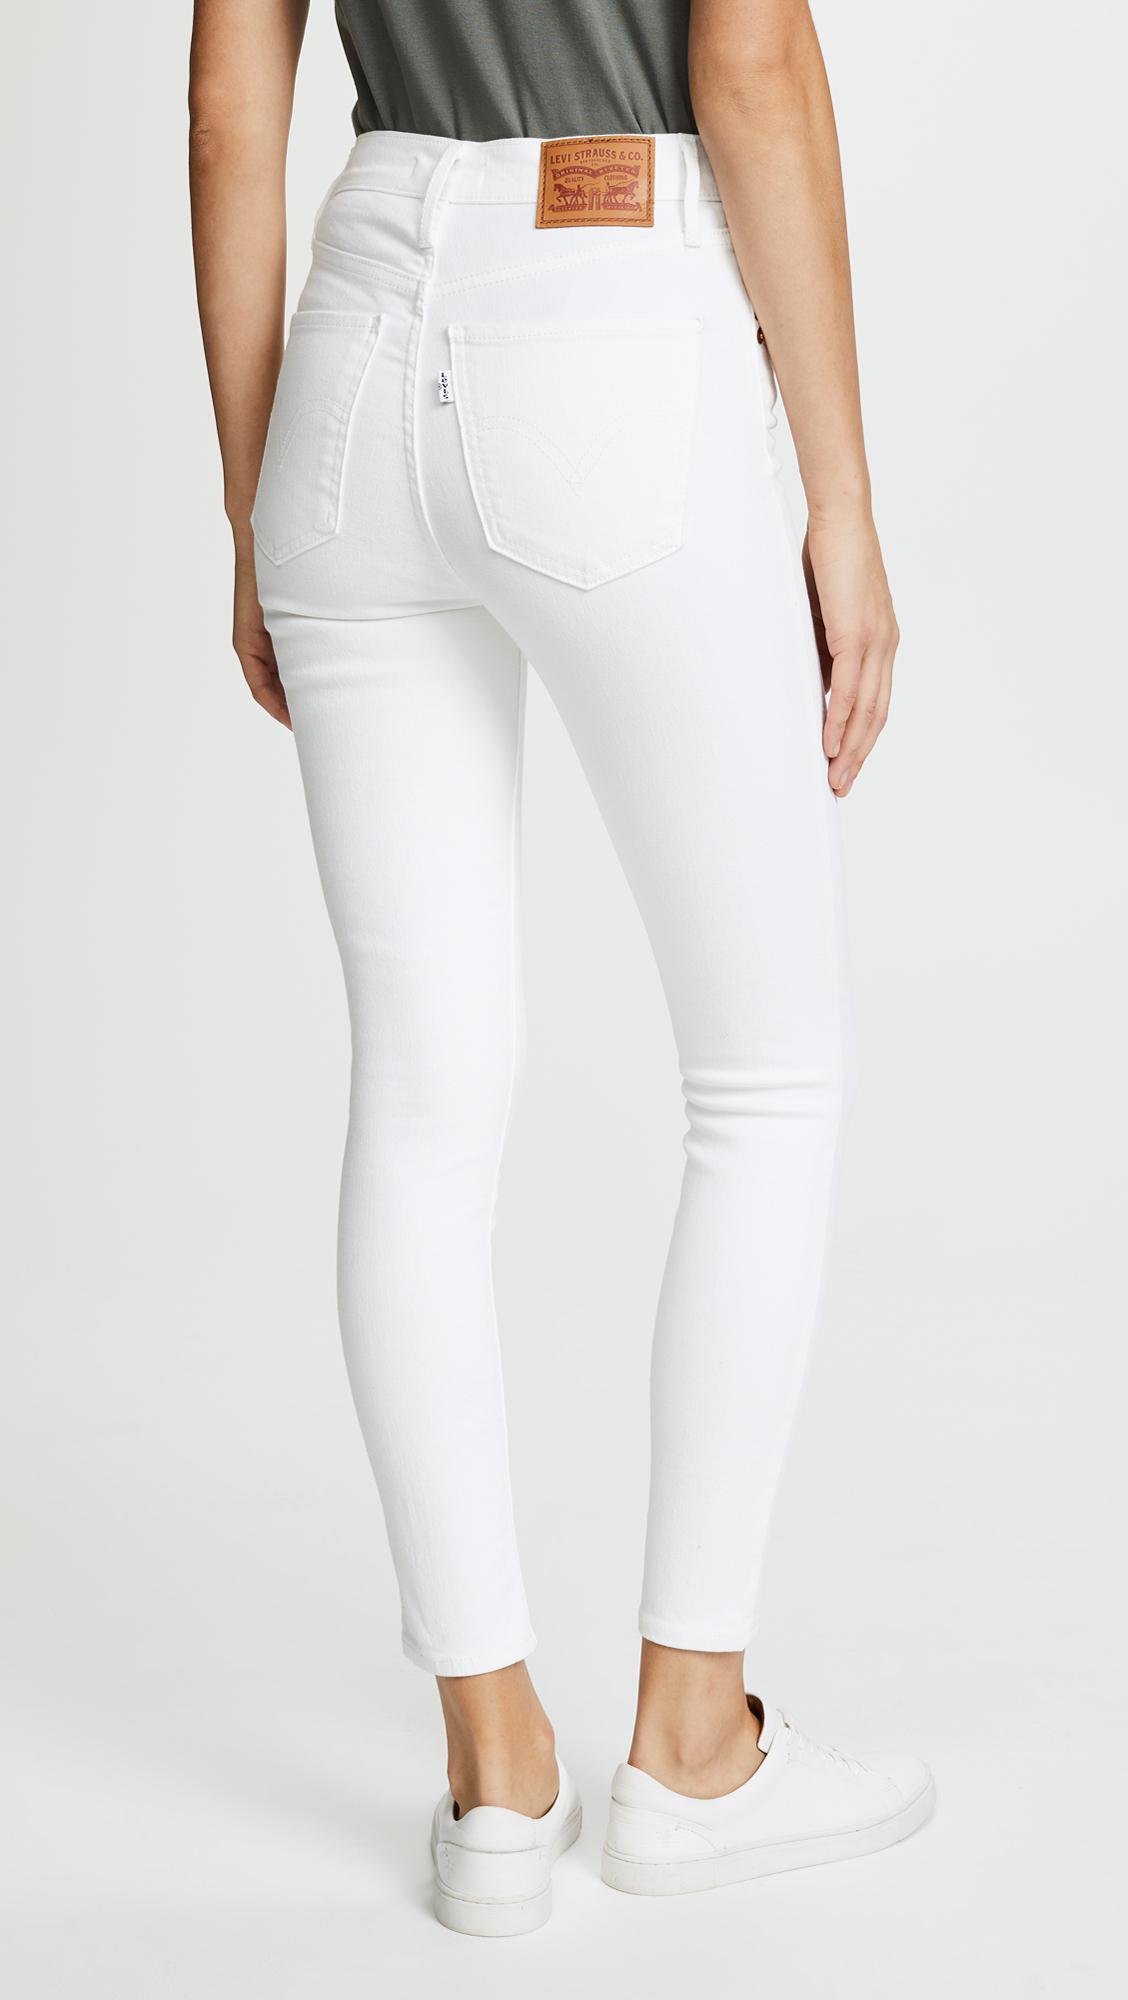 Levi's Denim Mile High Ankle Super Skinny Jeans in White | Lyst